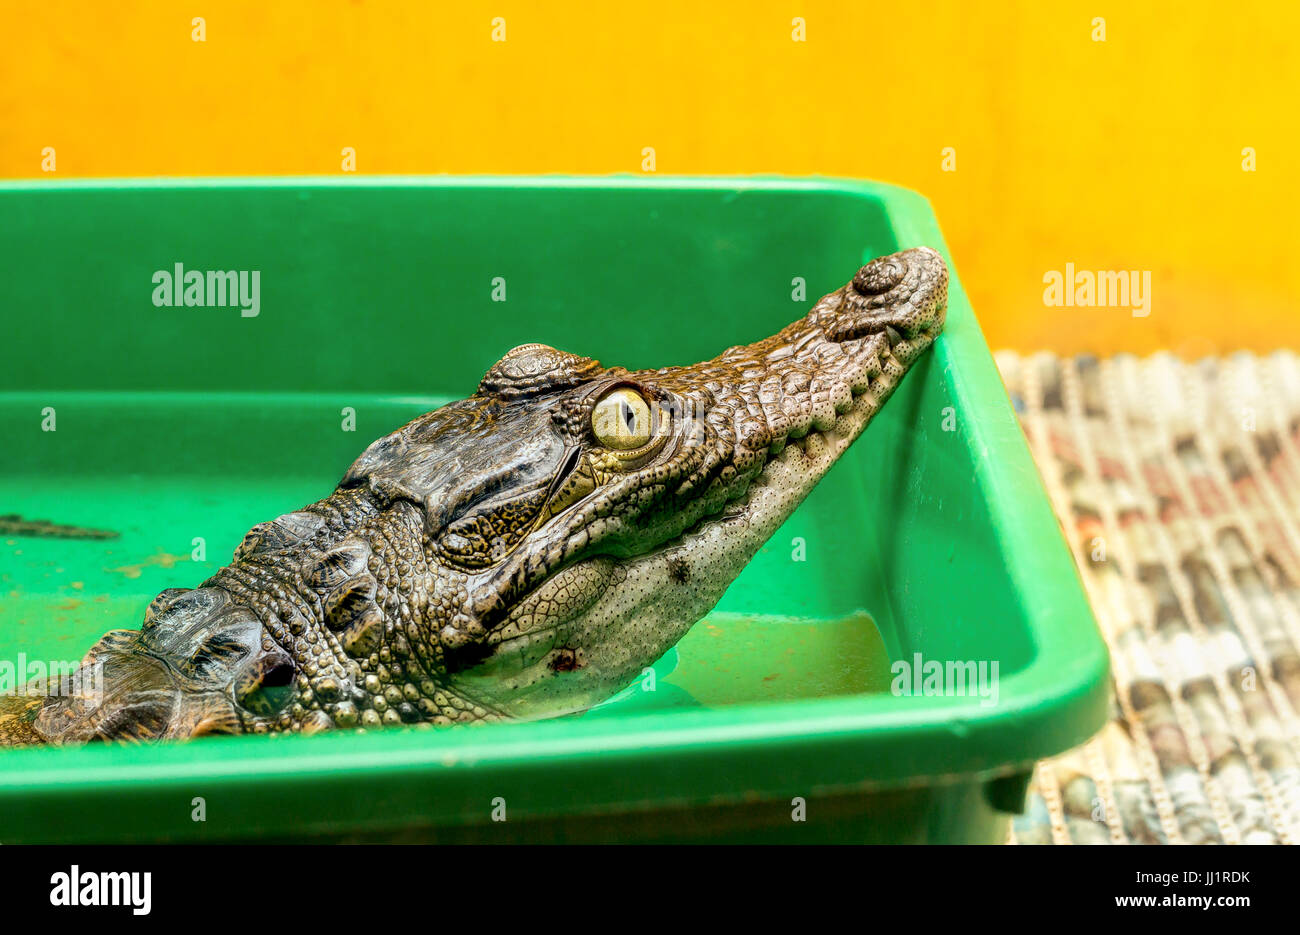 Crocodile in the terrarium Stock Photo